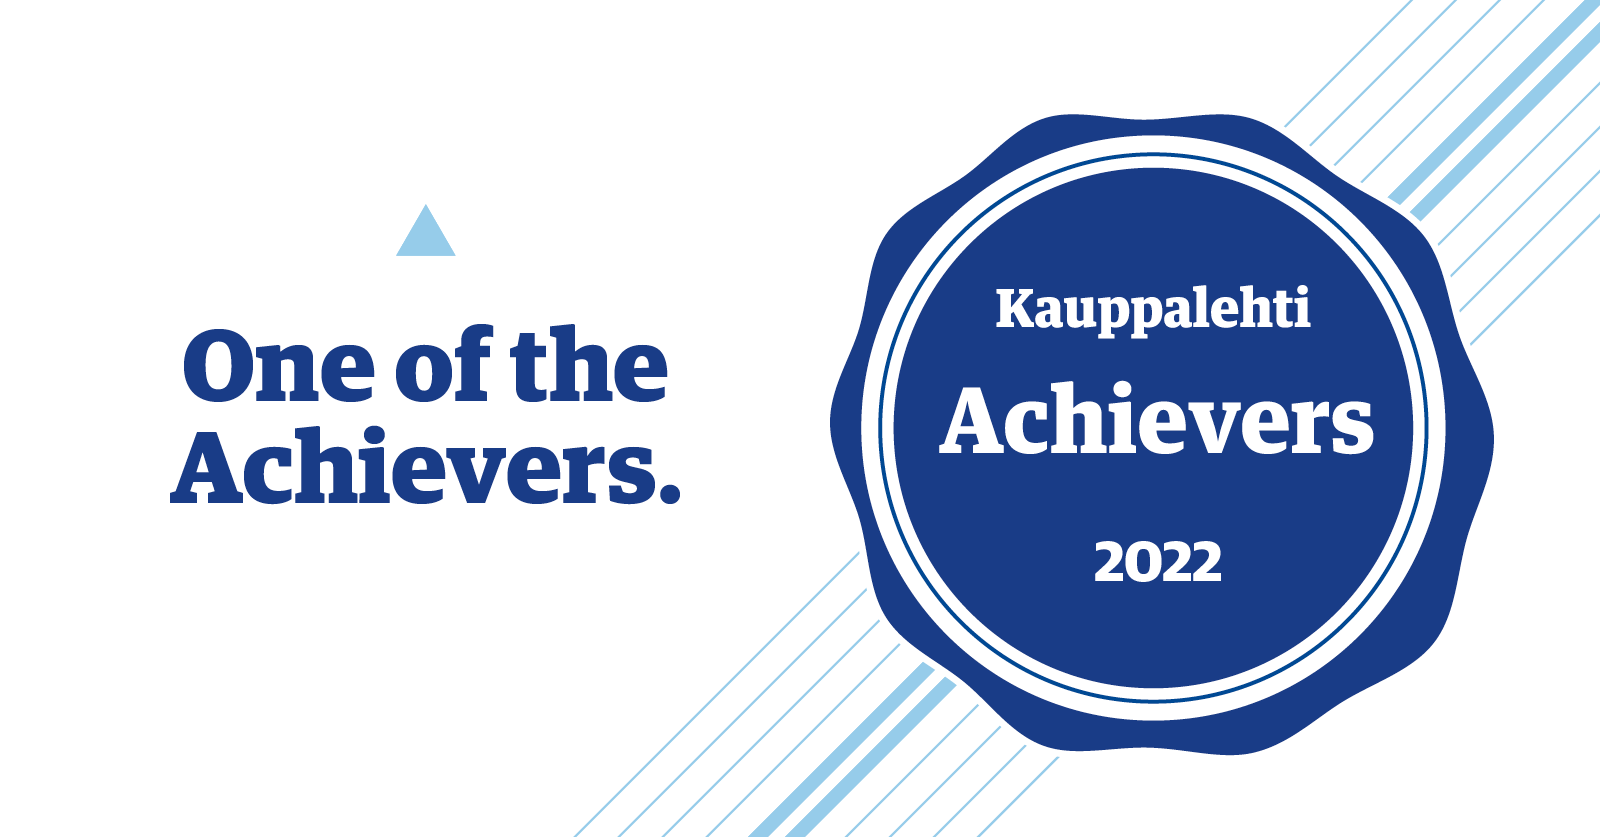 VAMK received Kauppalehti Achievers certificate